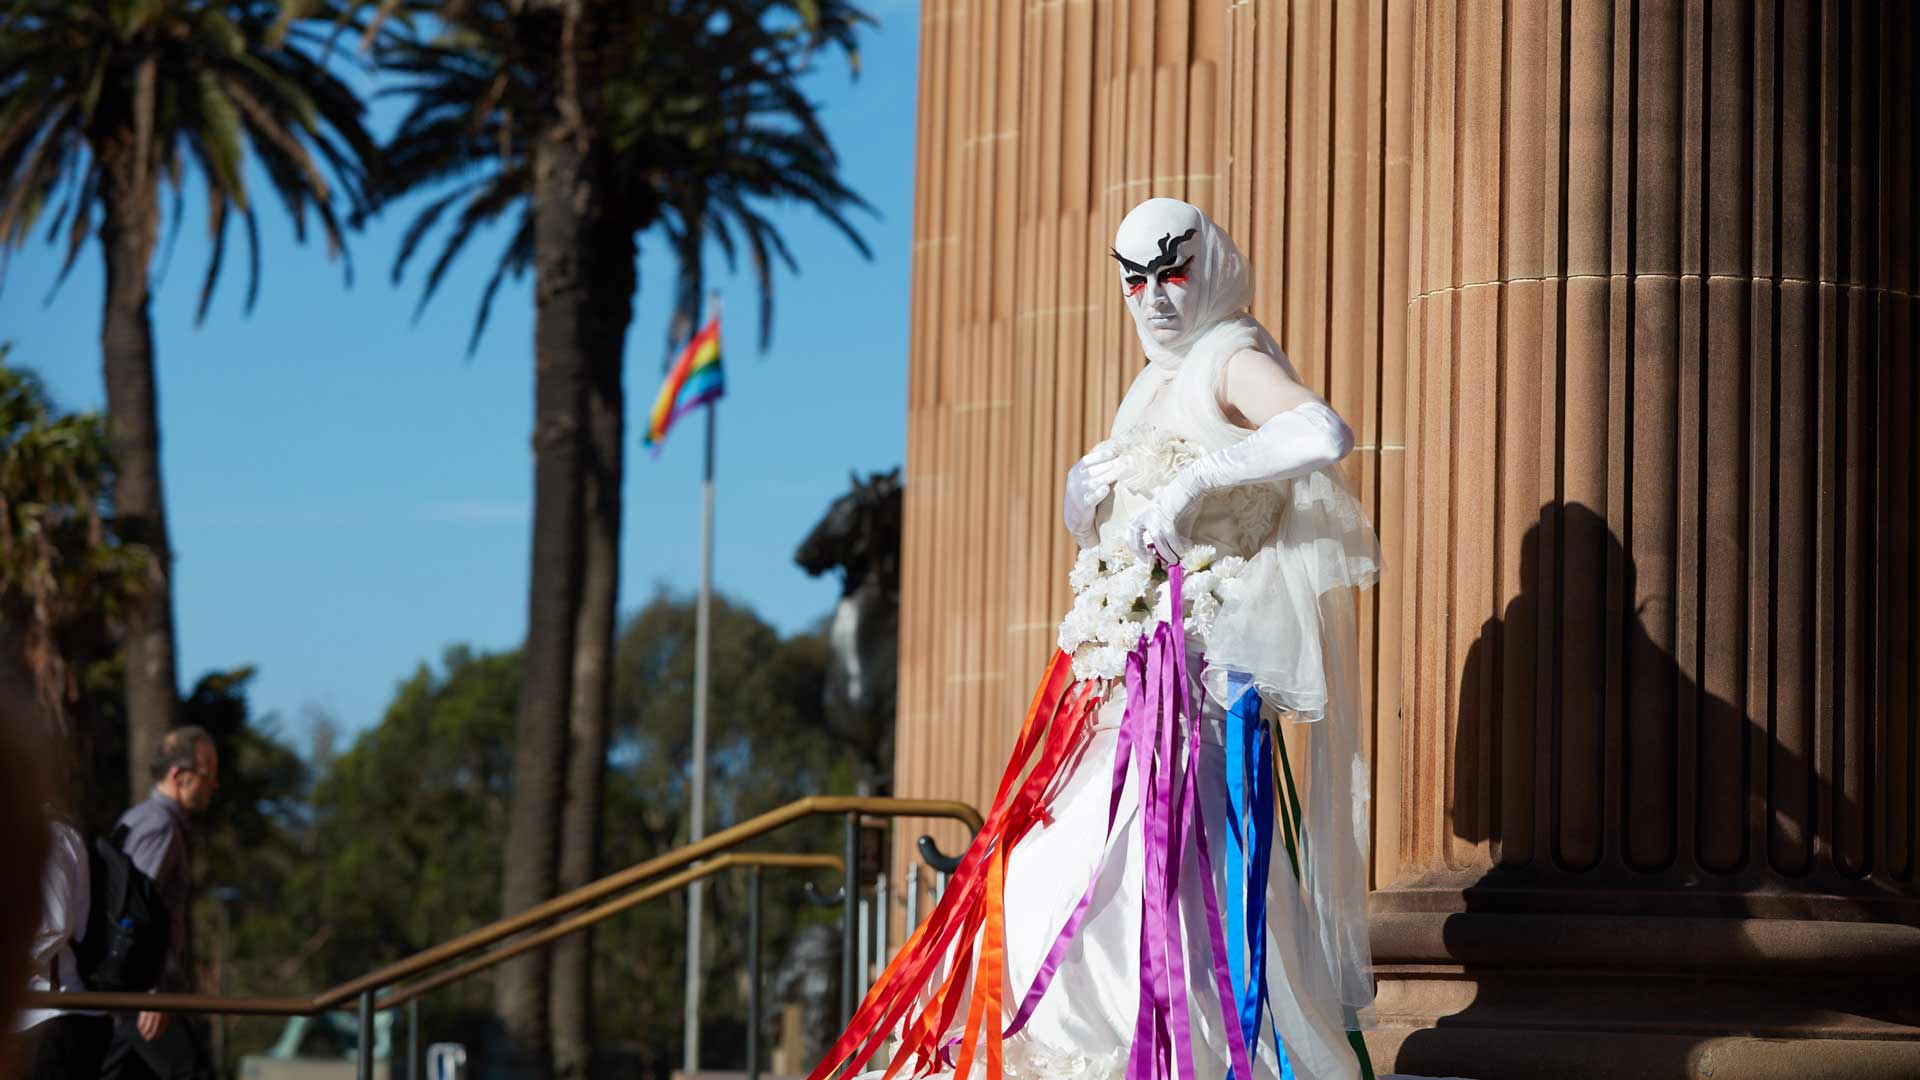 Sydney Gay and Lesbian Mardi Gras Has Unveiled Its Fearless 2019 Program